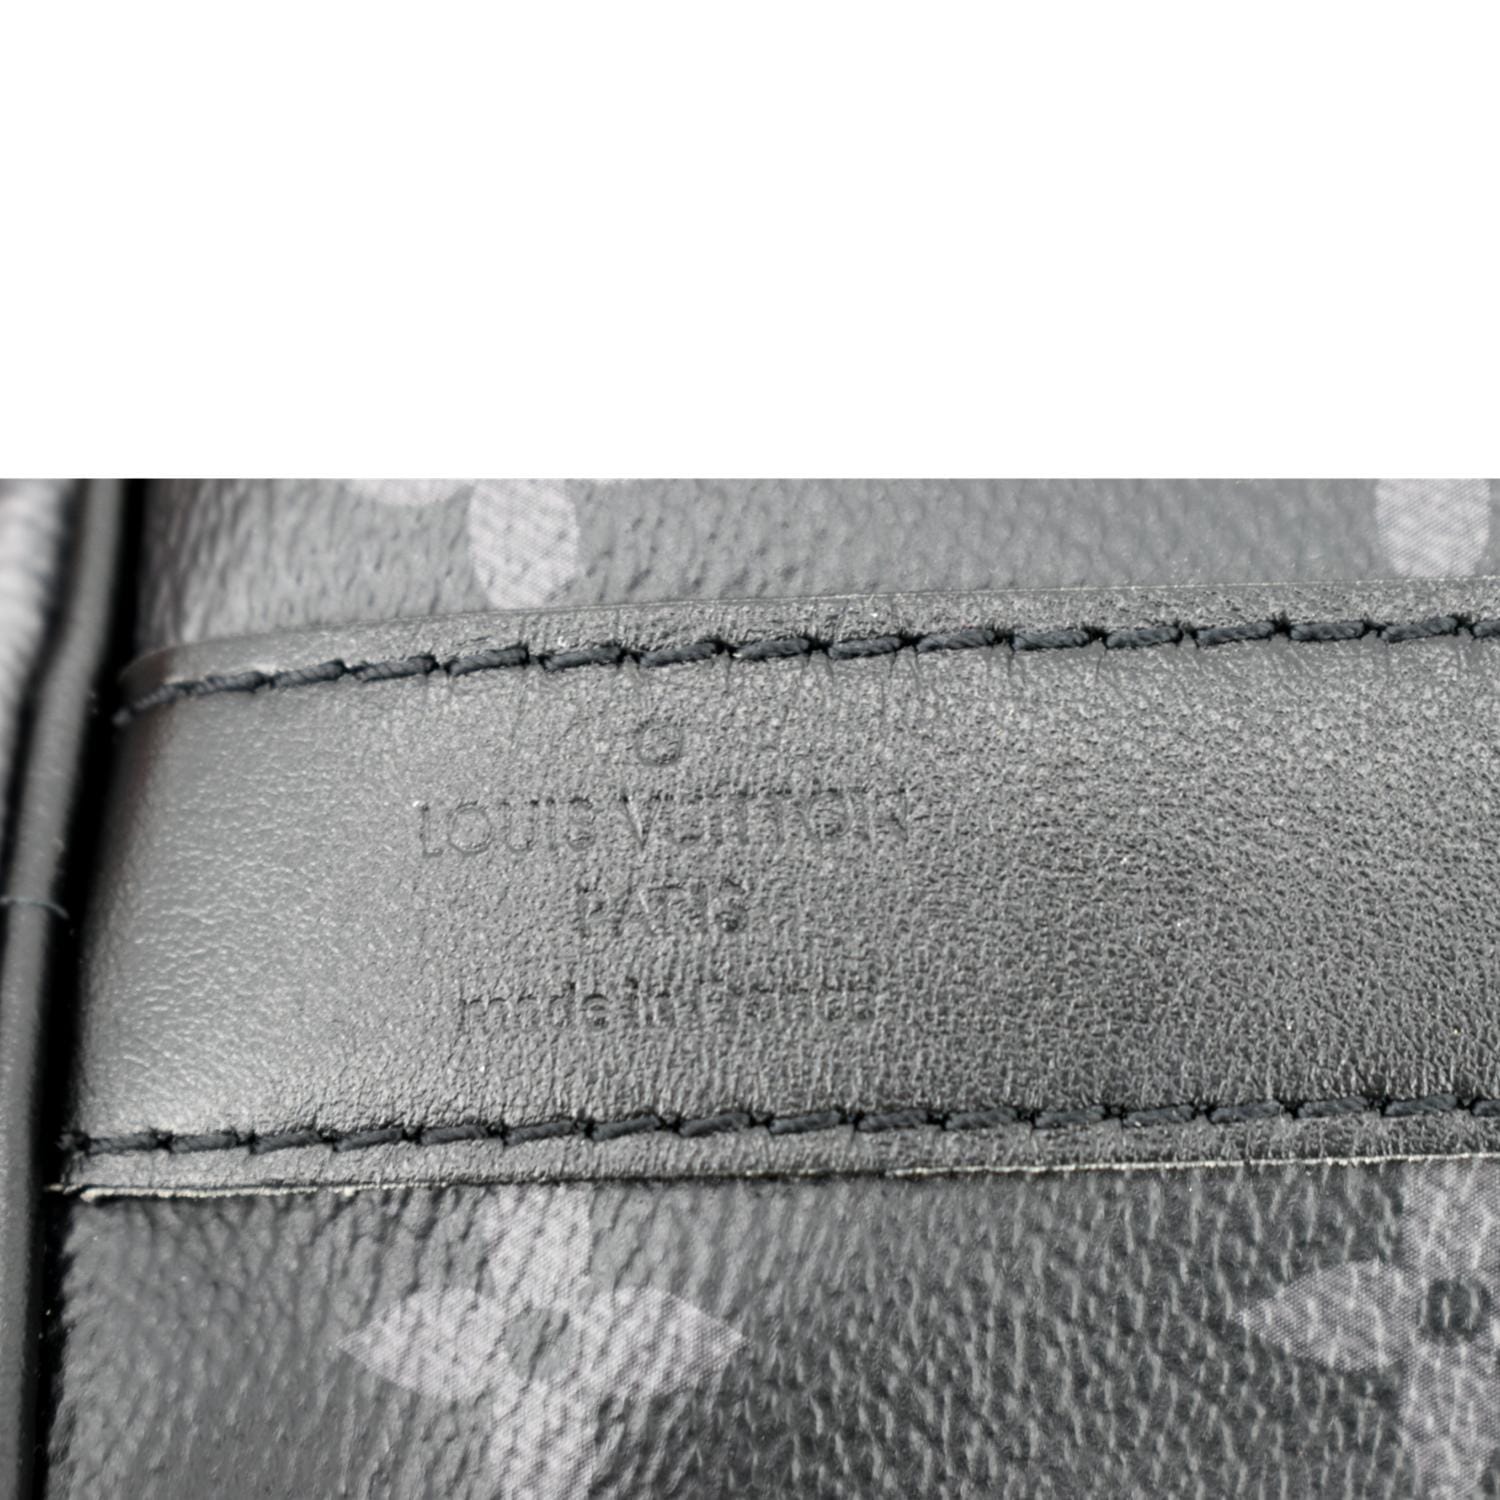 Louis Vuitton NEW Monogram Black Silver Top Handle Men's Travel